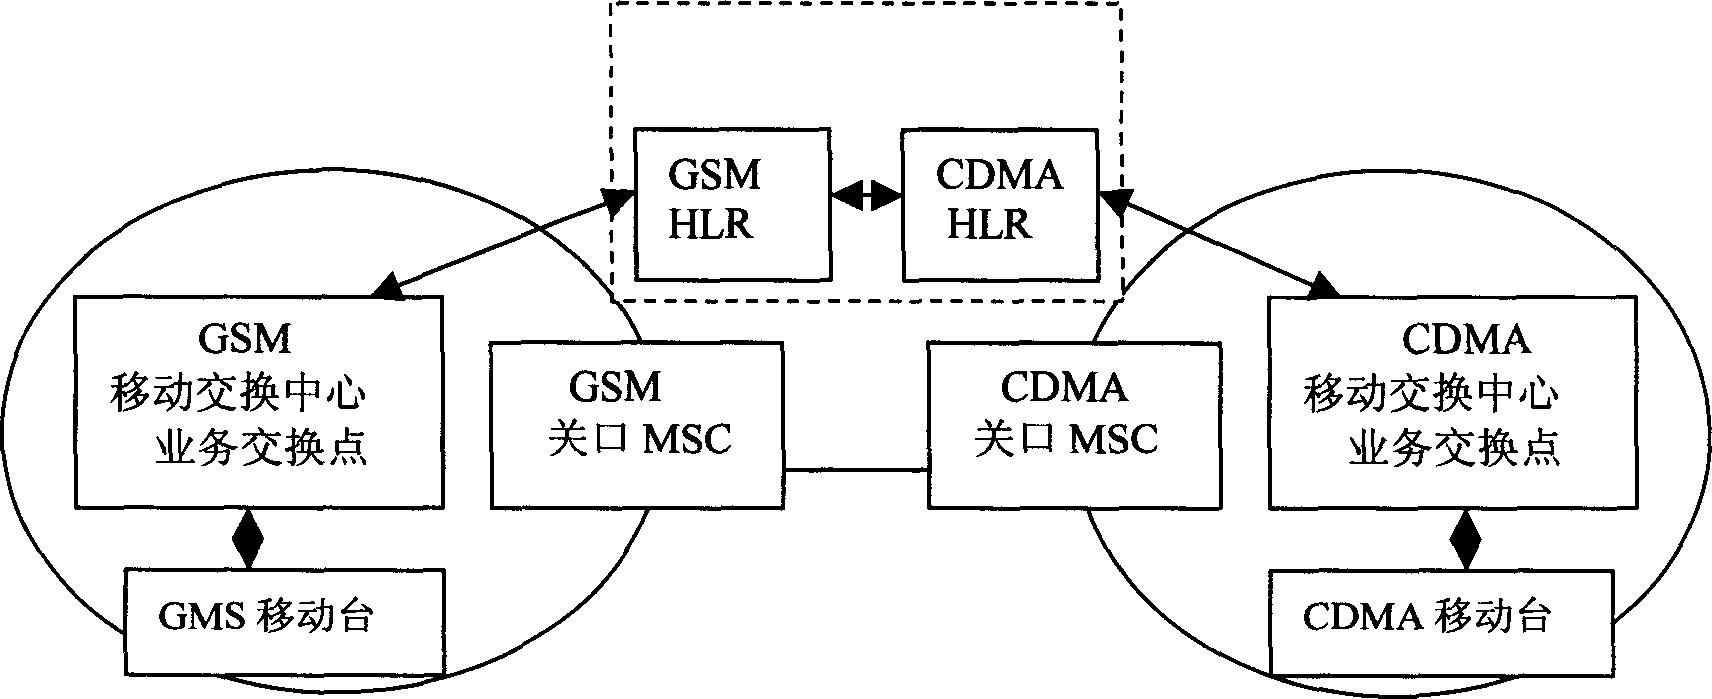 Method of realizing GSM and CDMA network information intercommunication